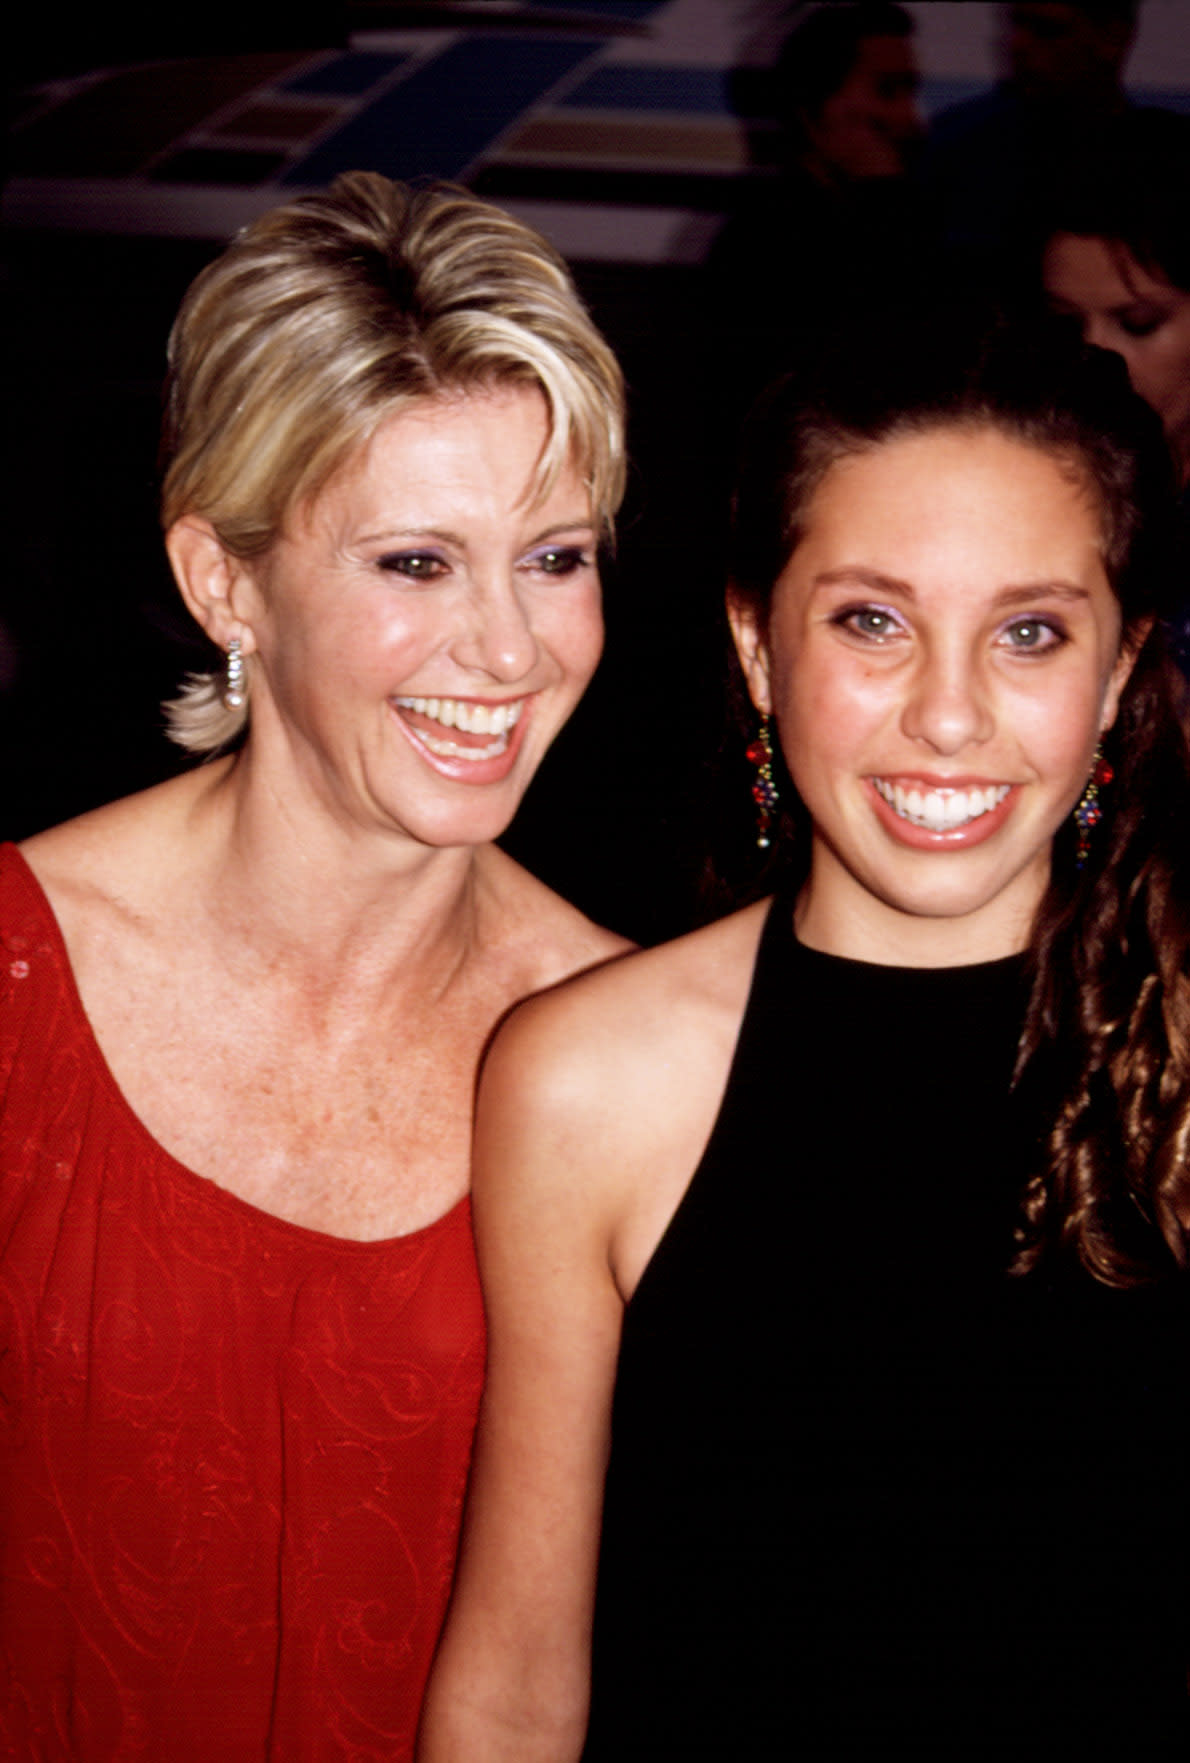 Olivia Newton-John and daughter Chloe Lattanzi at the American Music Awards, January 2000 (Everett Collection)